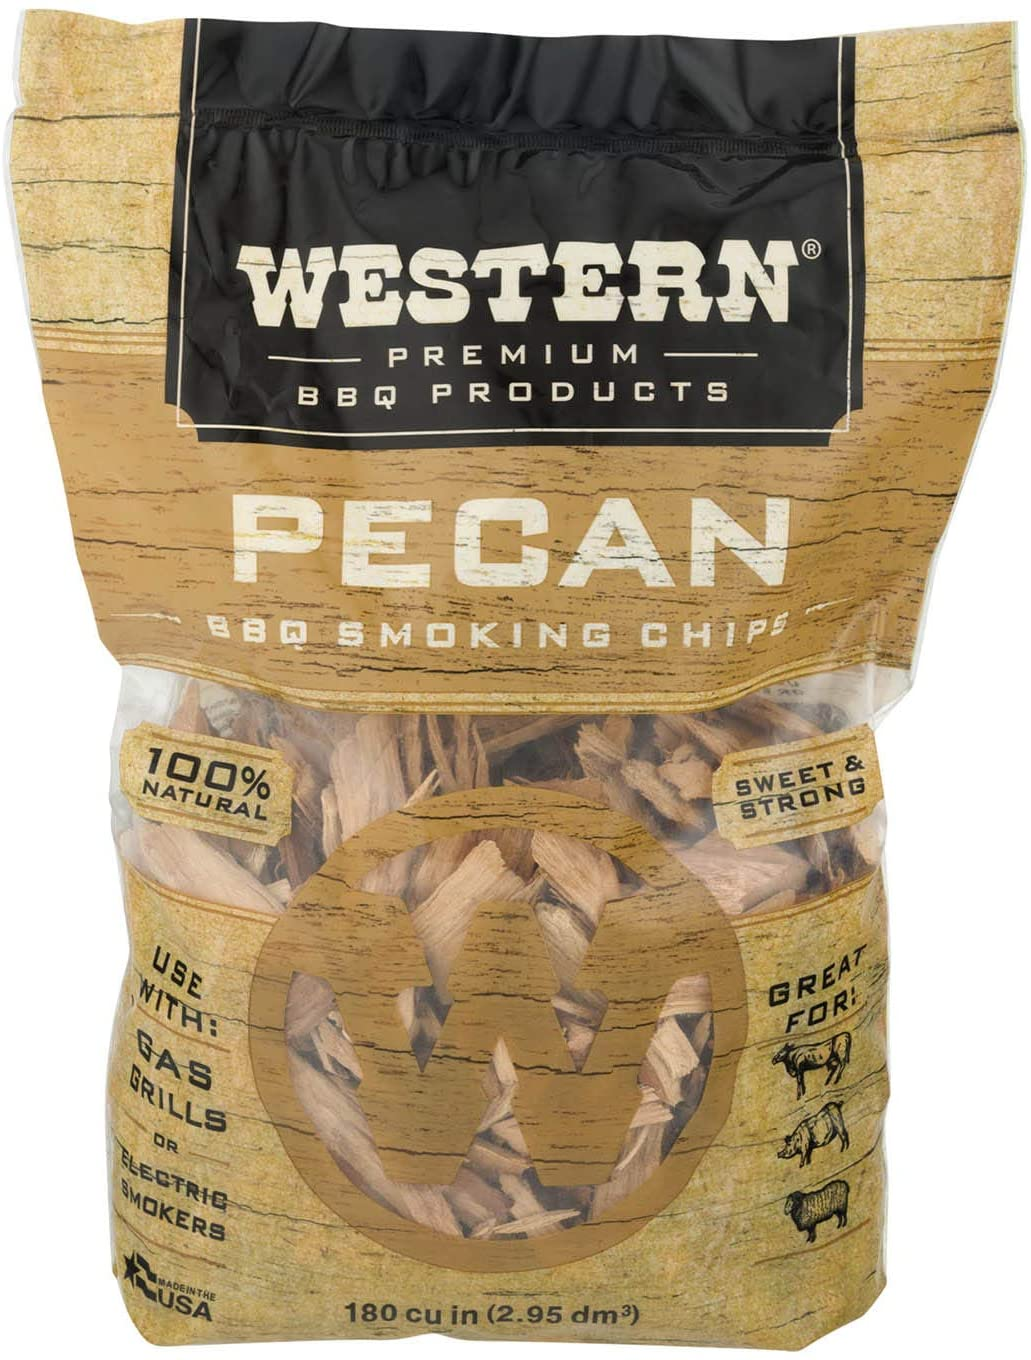 Western Premium BBQ Products Pecan BBQ Smoking Chips $1.97